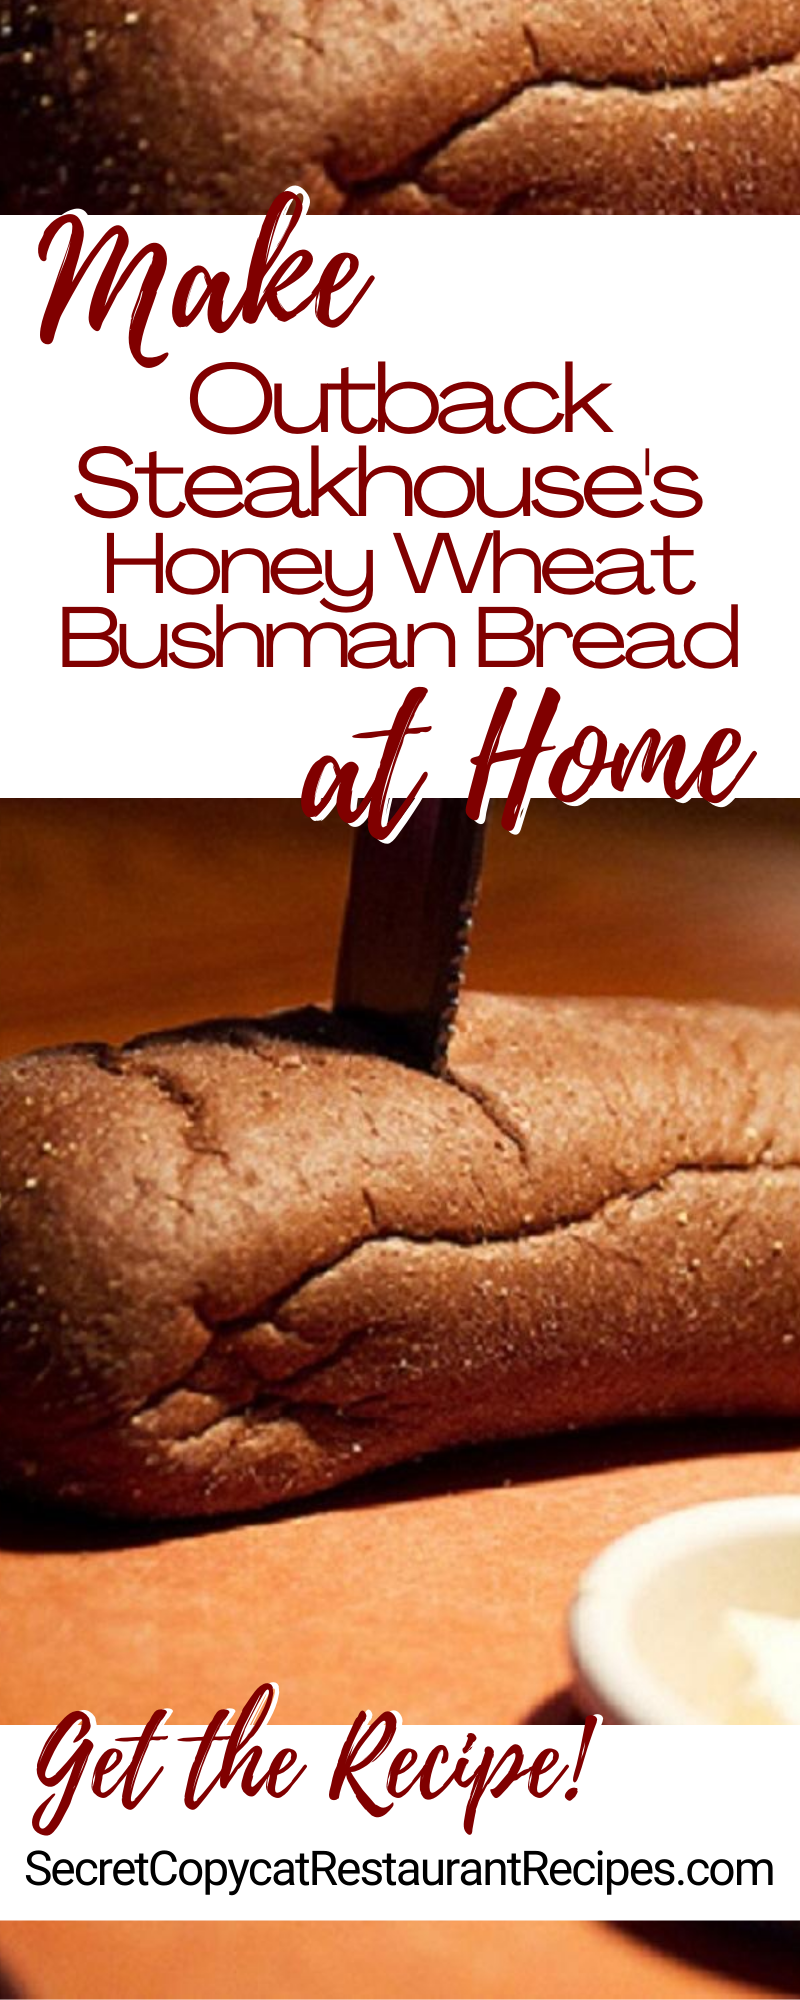 Outback Steakhouse Honey Wheat Bushman Bread Recipe